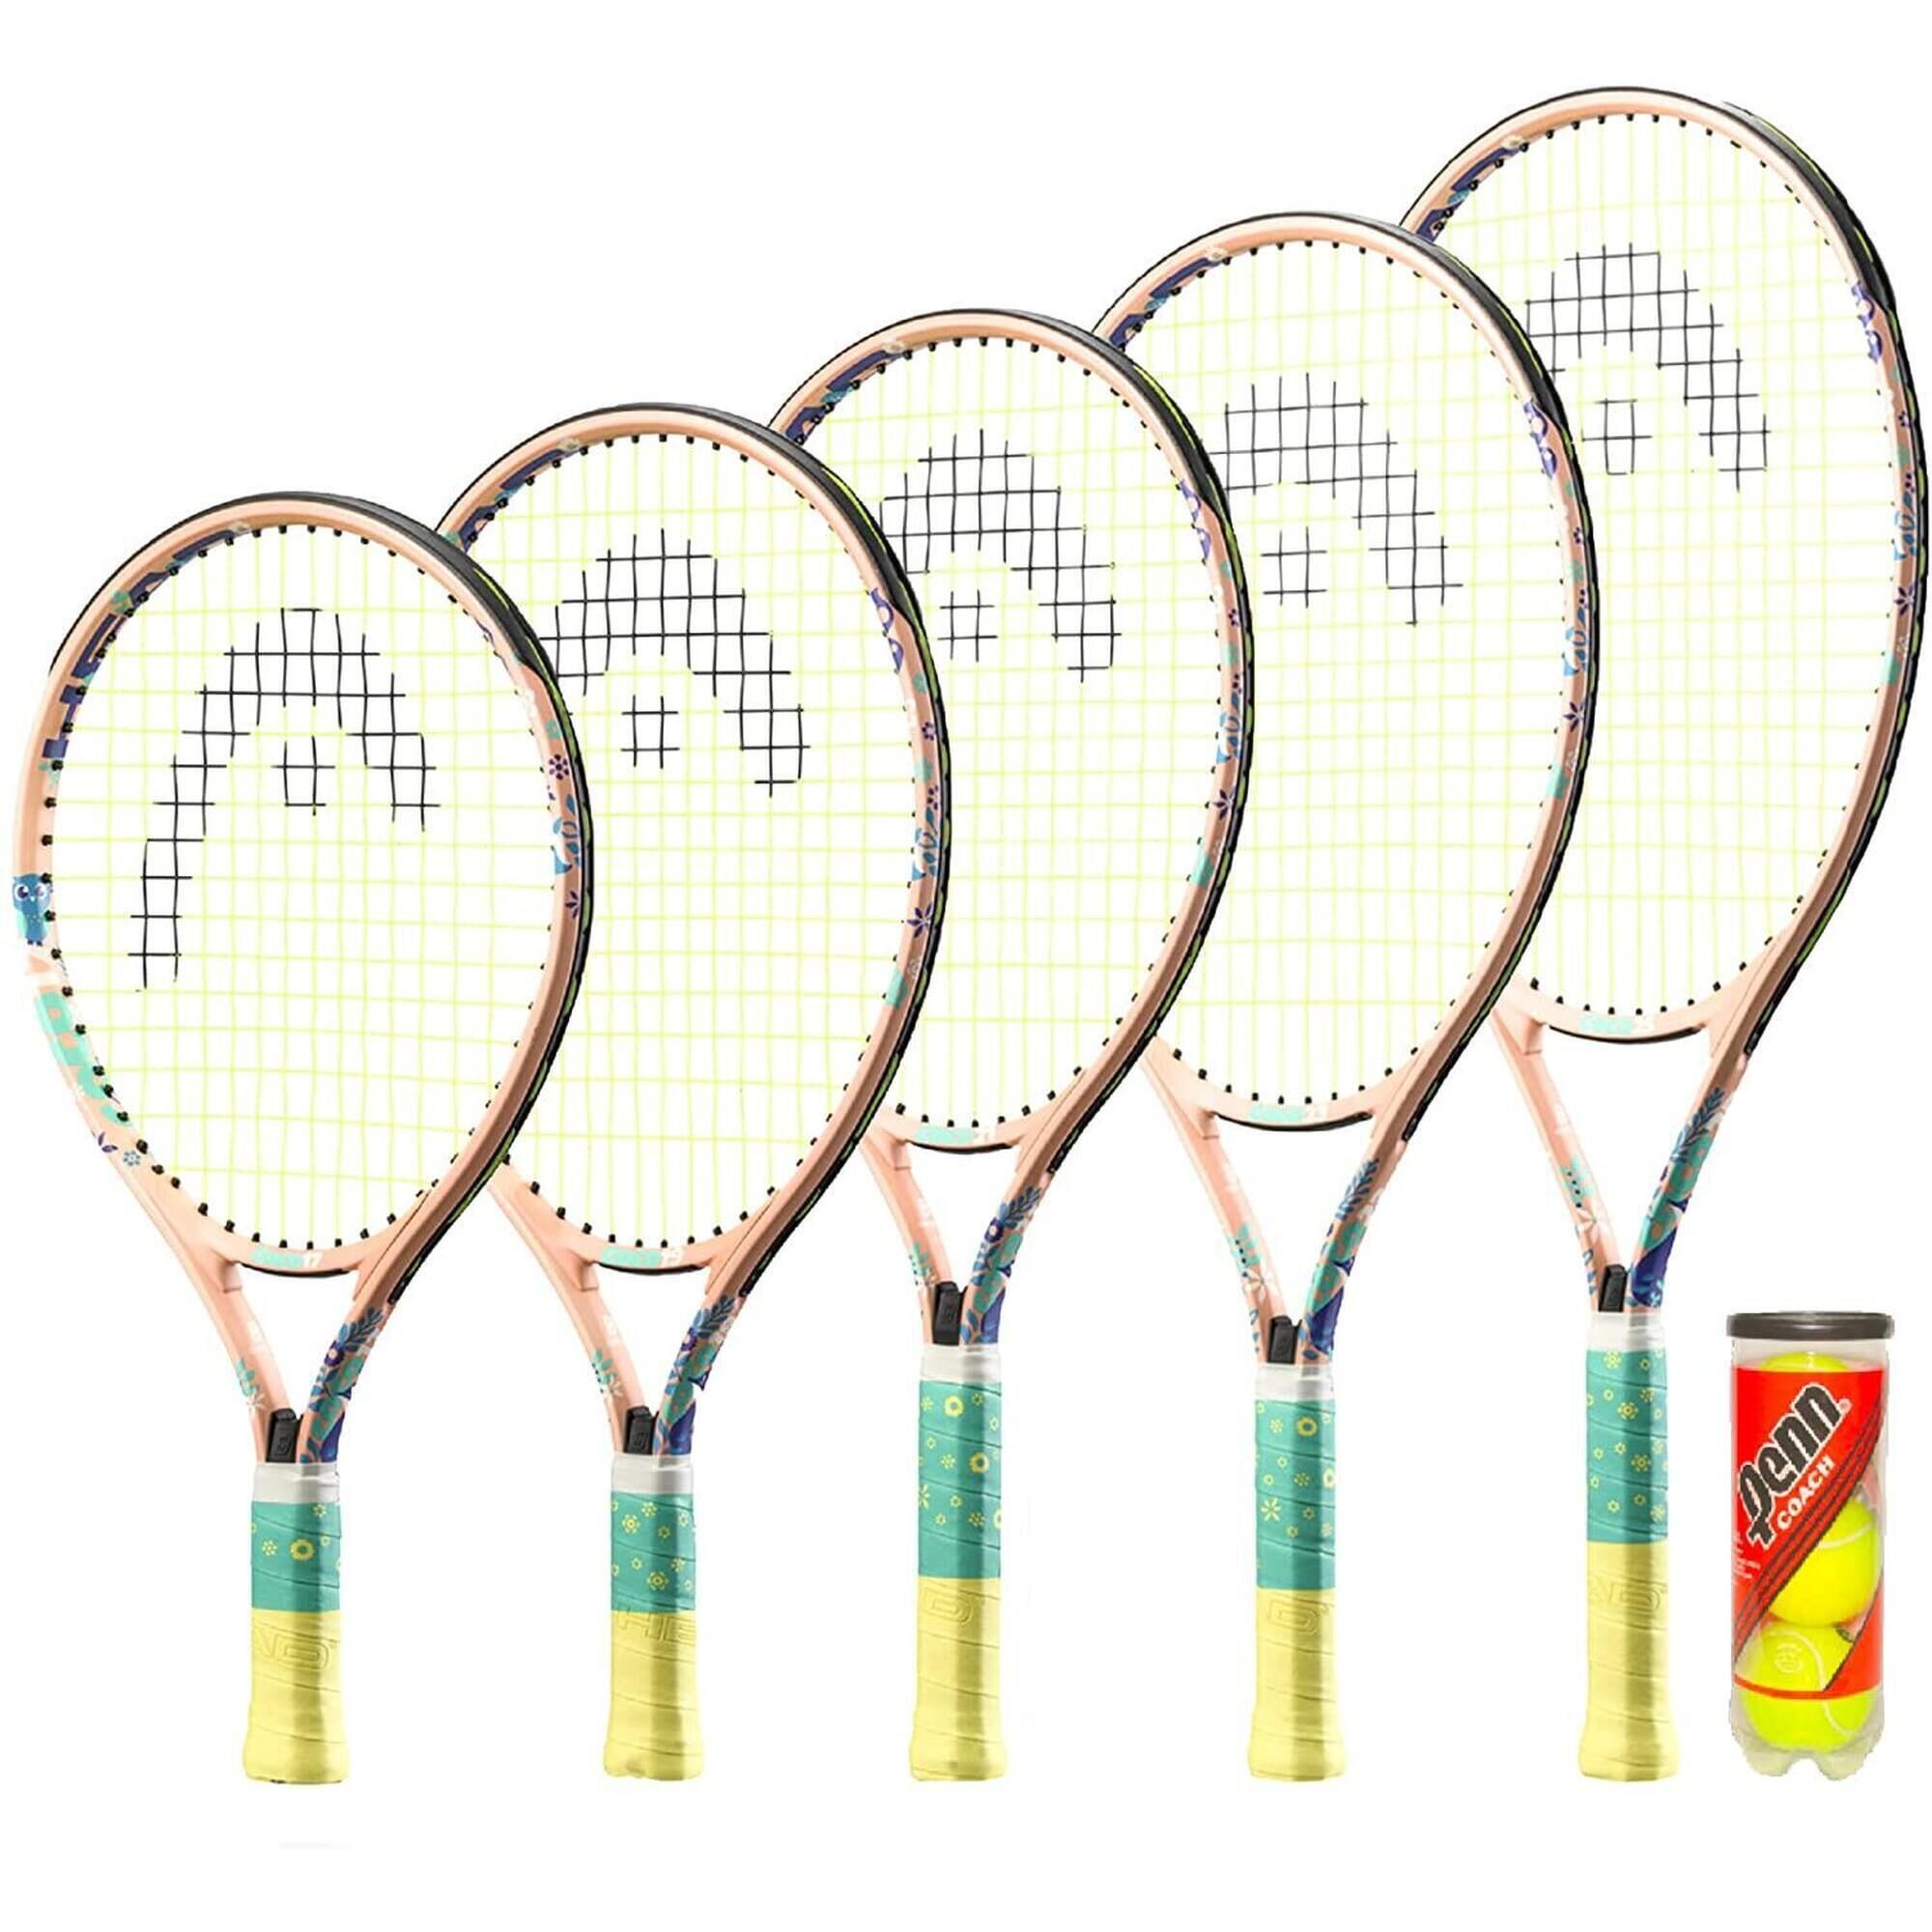 HEAD HEAD Coco Junior Tennis Racket, inc Protective Cover & 3 Tennis Balls